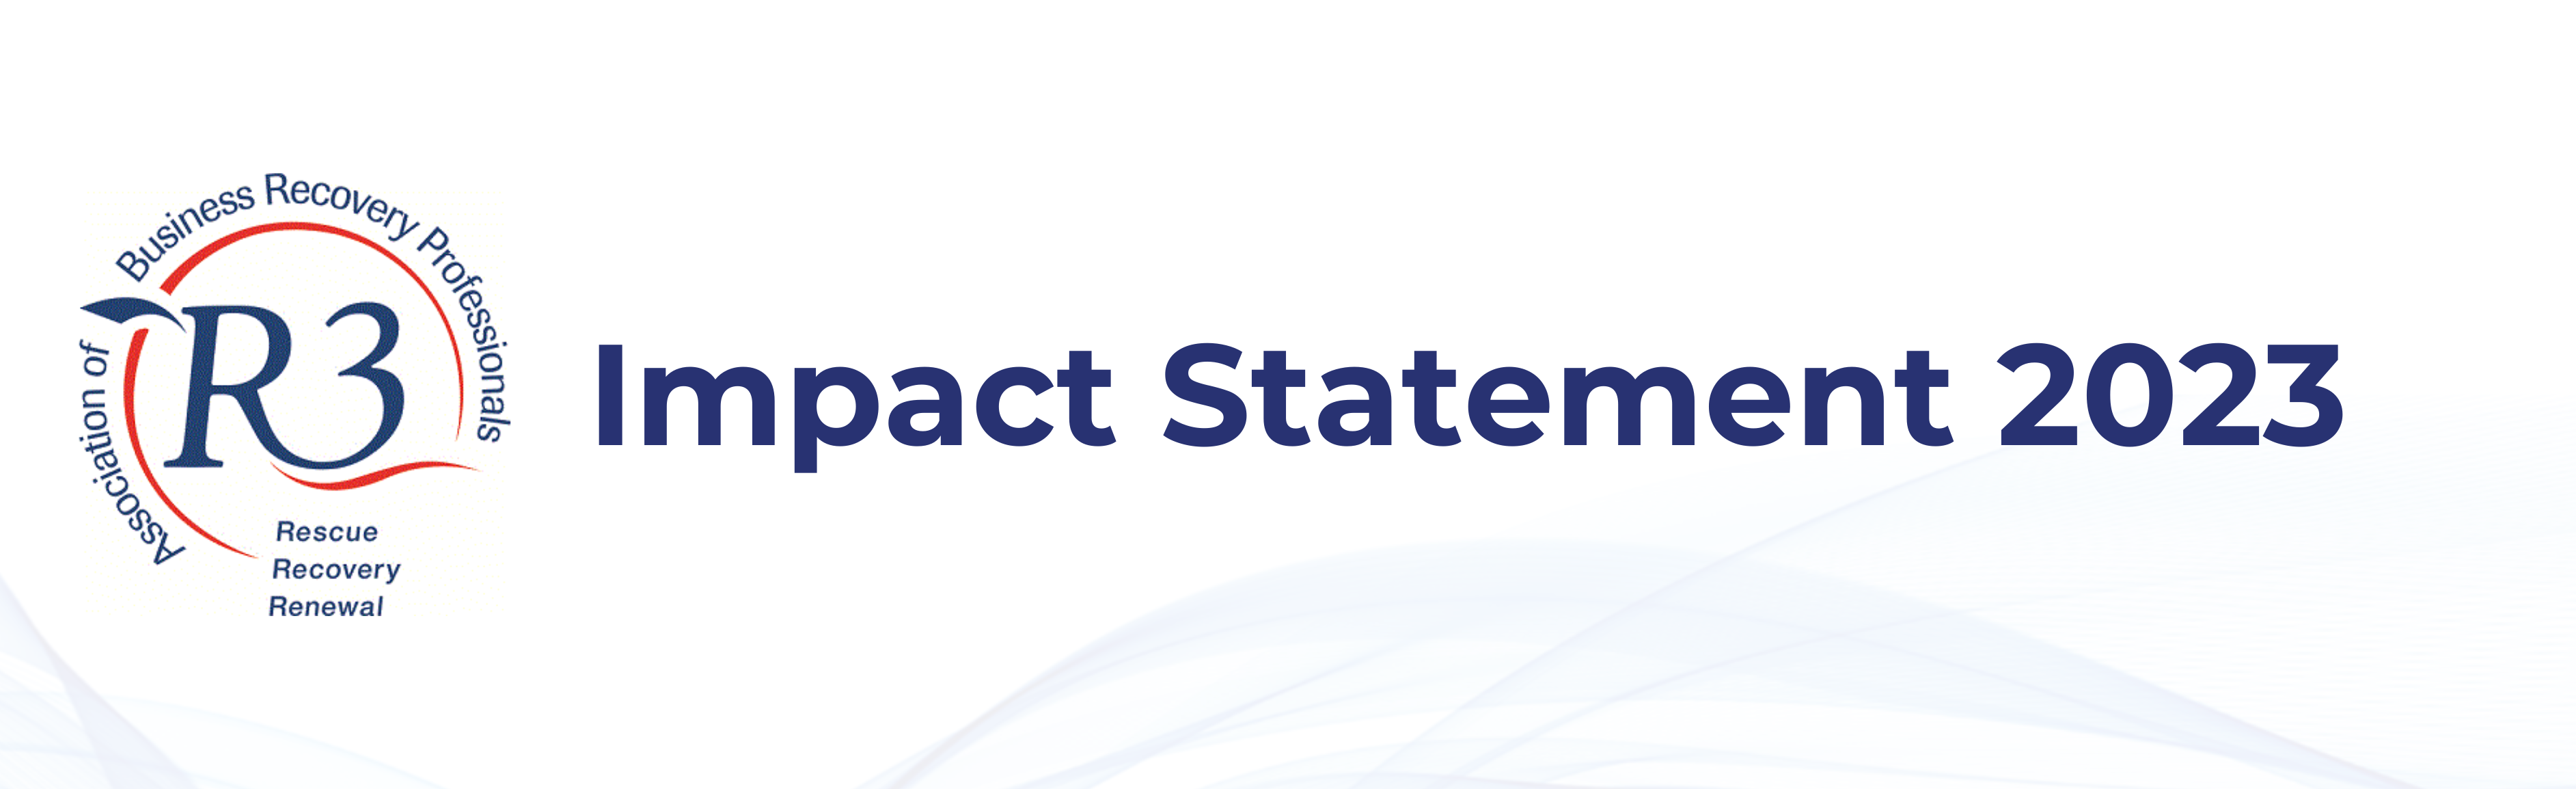 R3 Impact Statement